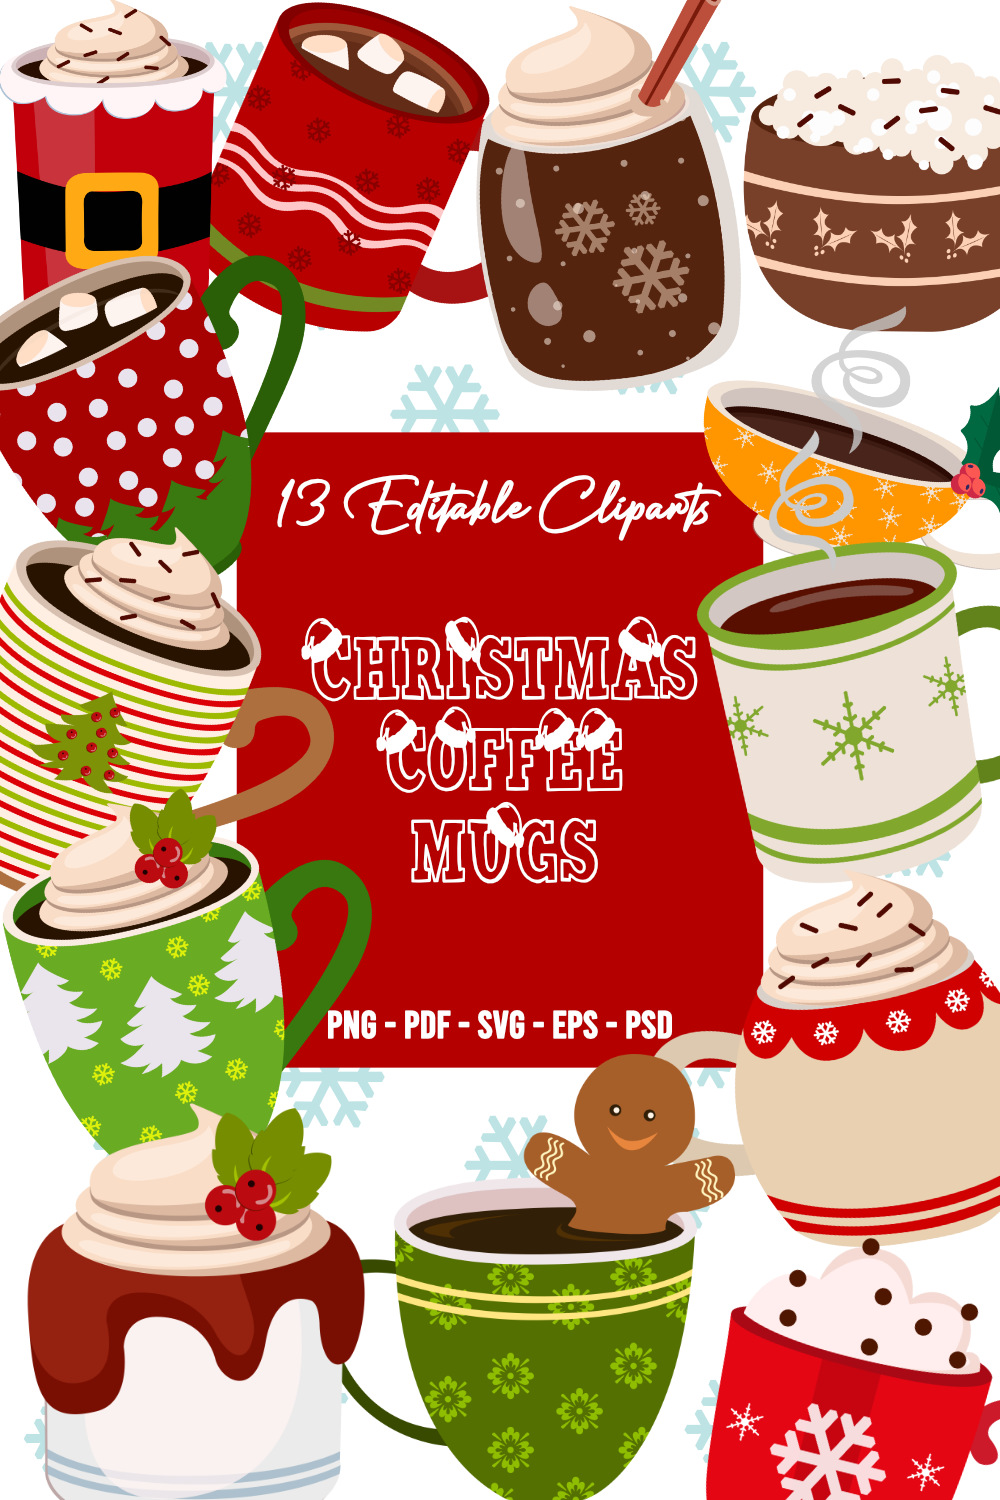 Pinterest Christmas Coffee Graphics image.